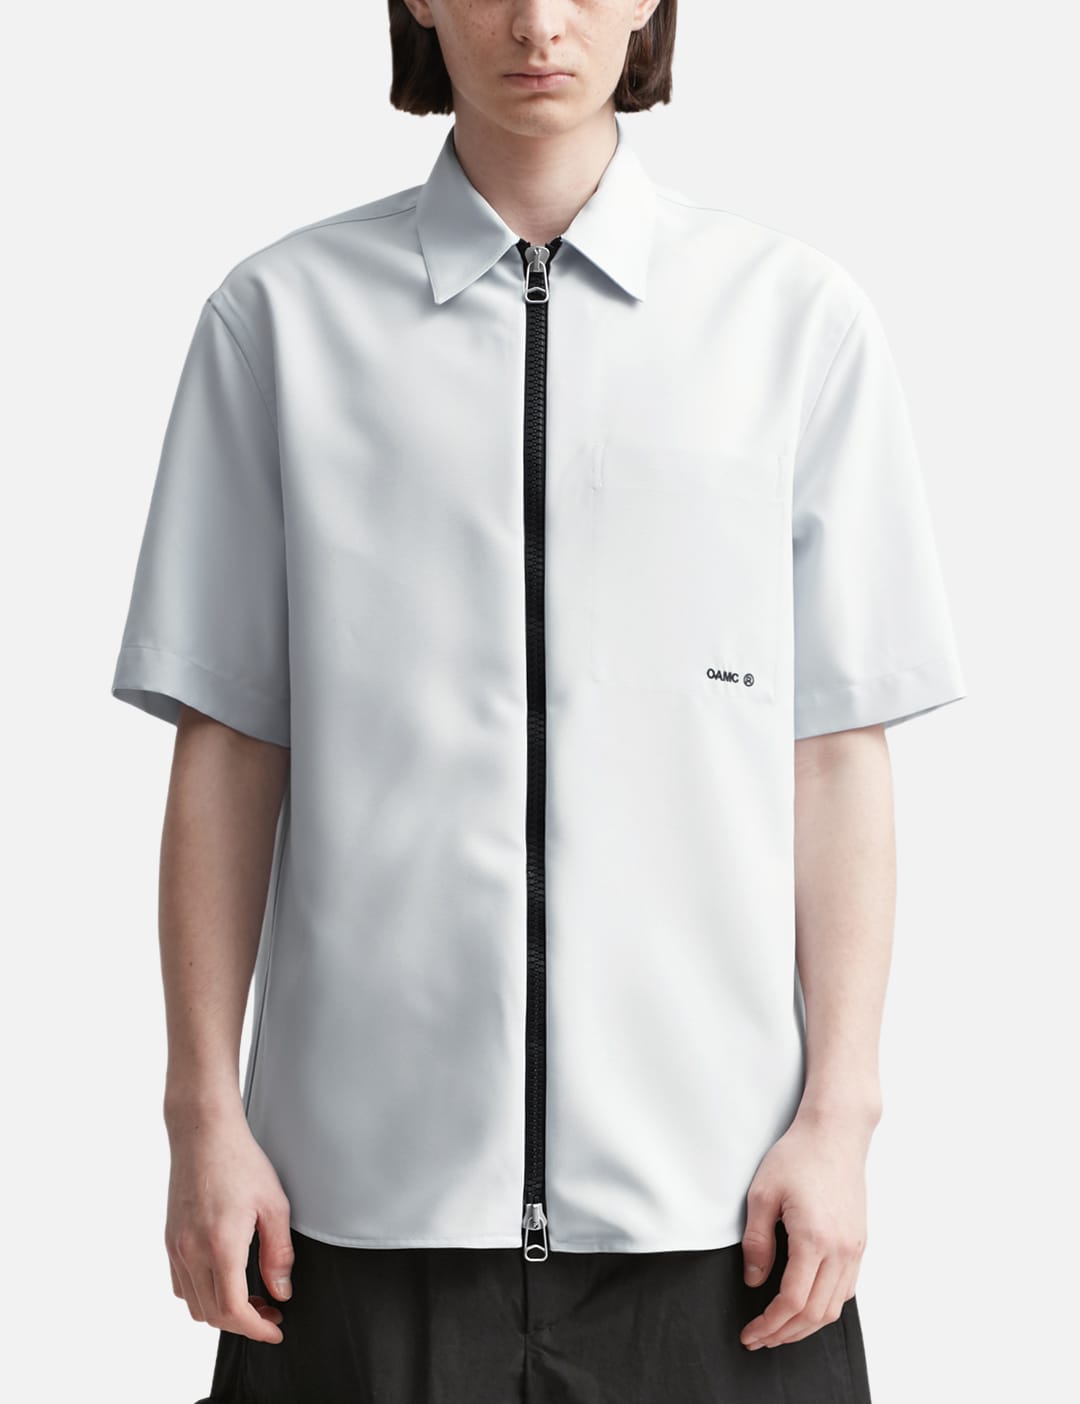 OAMC - Short-Sleeved Ian Shirt | HBX - Globally Curated Fashion